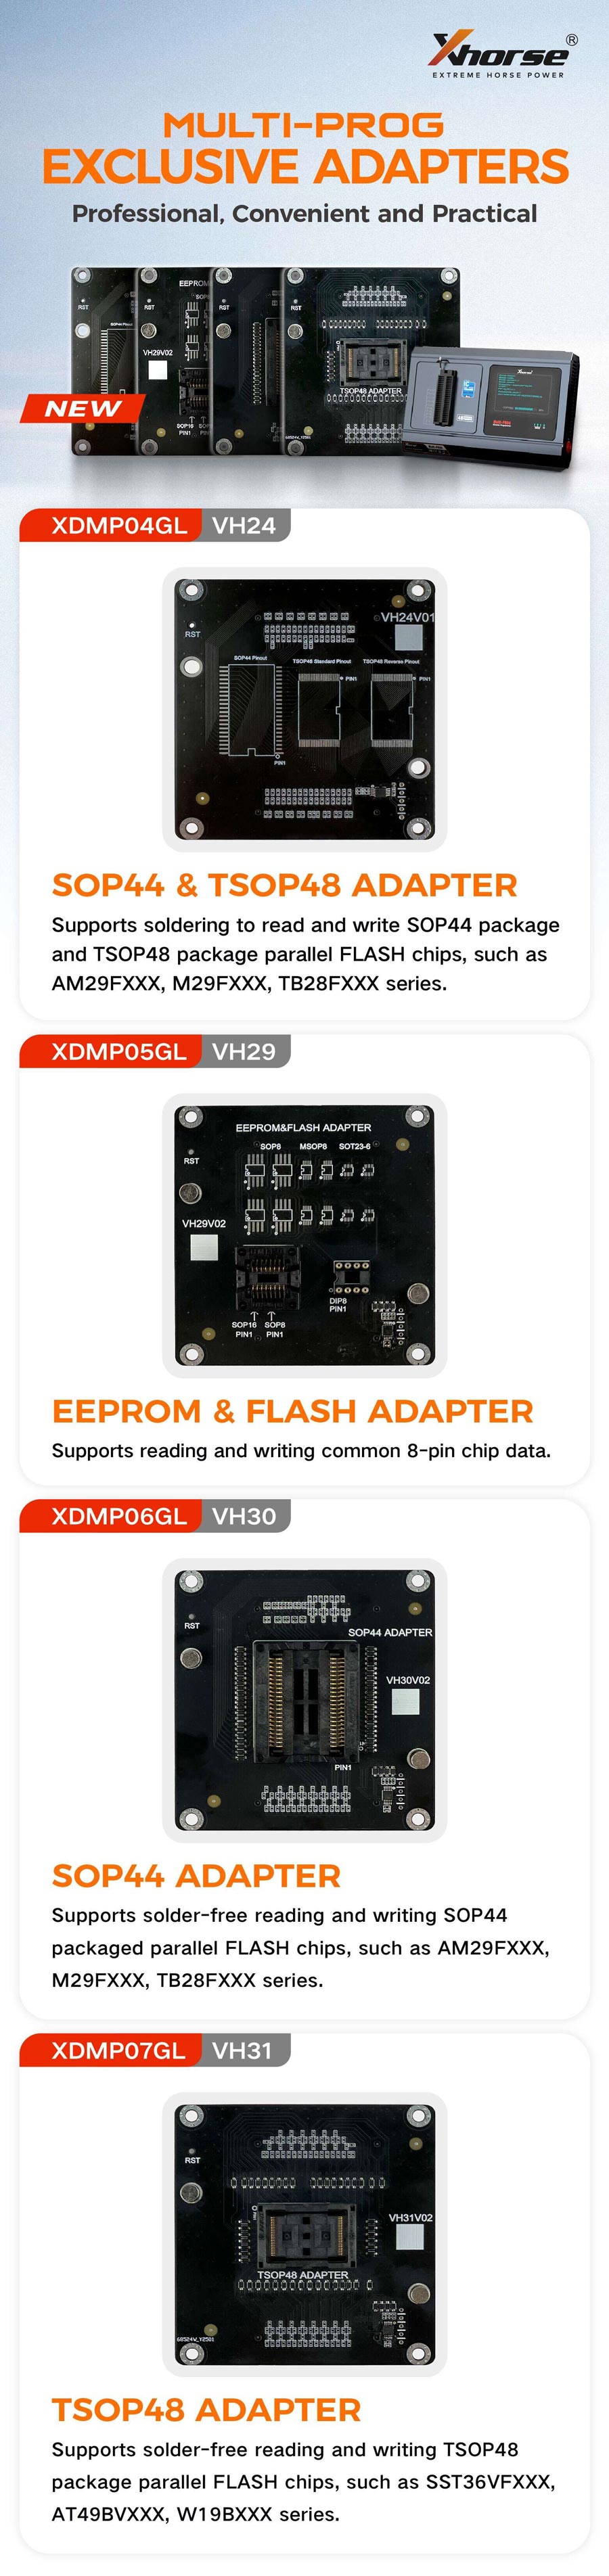 Xhorse XDMPO4GL VH24 SOP44 & TSOP48 Adapter